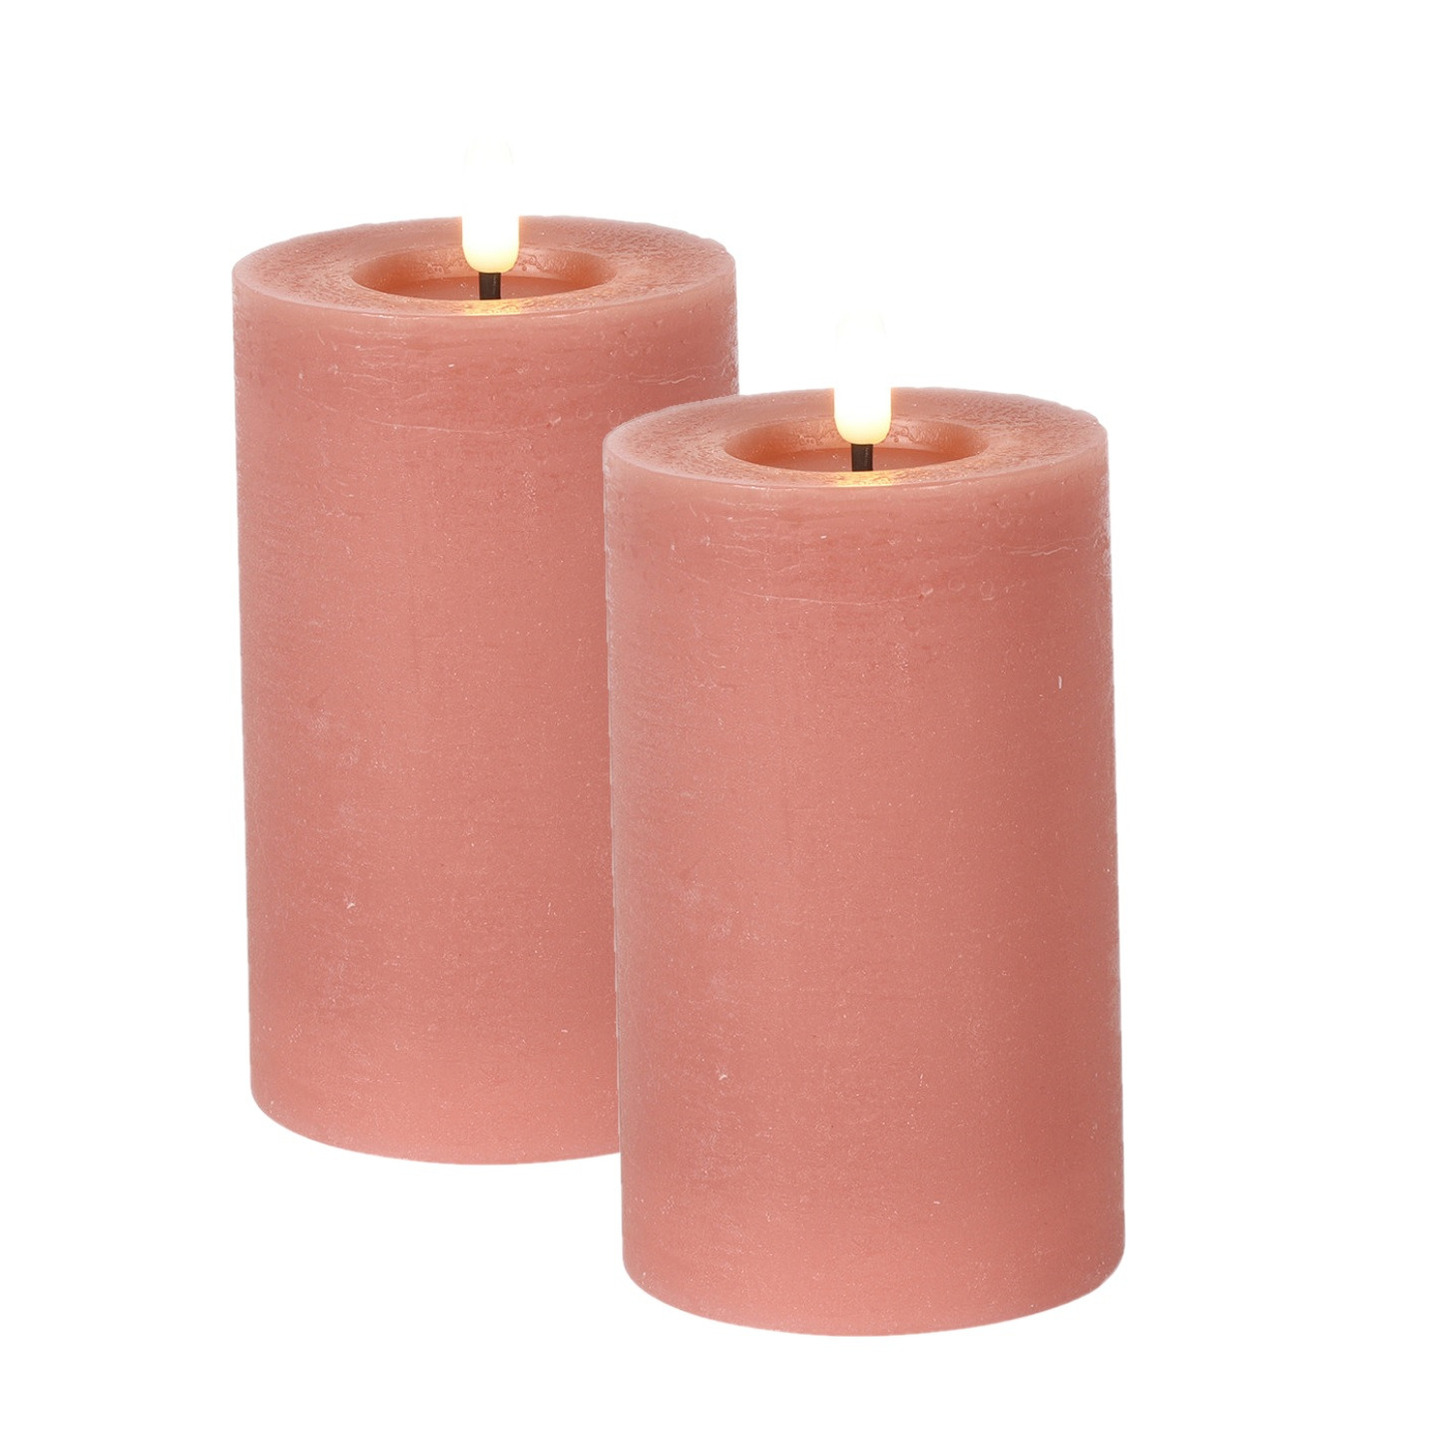 Countryfield Lyon LED kaarsen-stompkaarsens 2x roze D7,5 x H12,5 cm